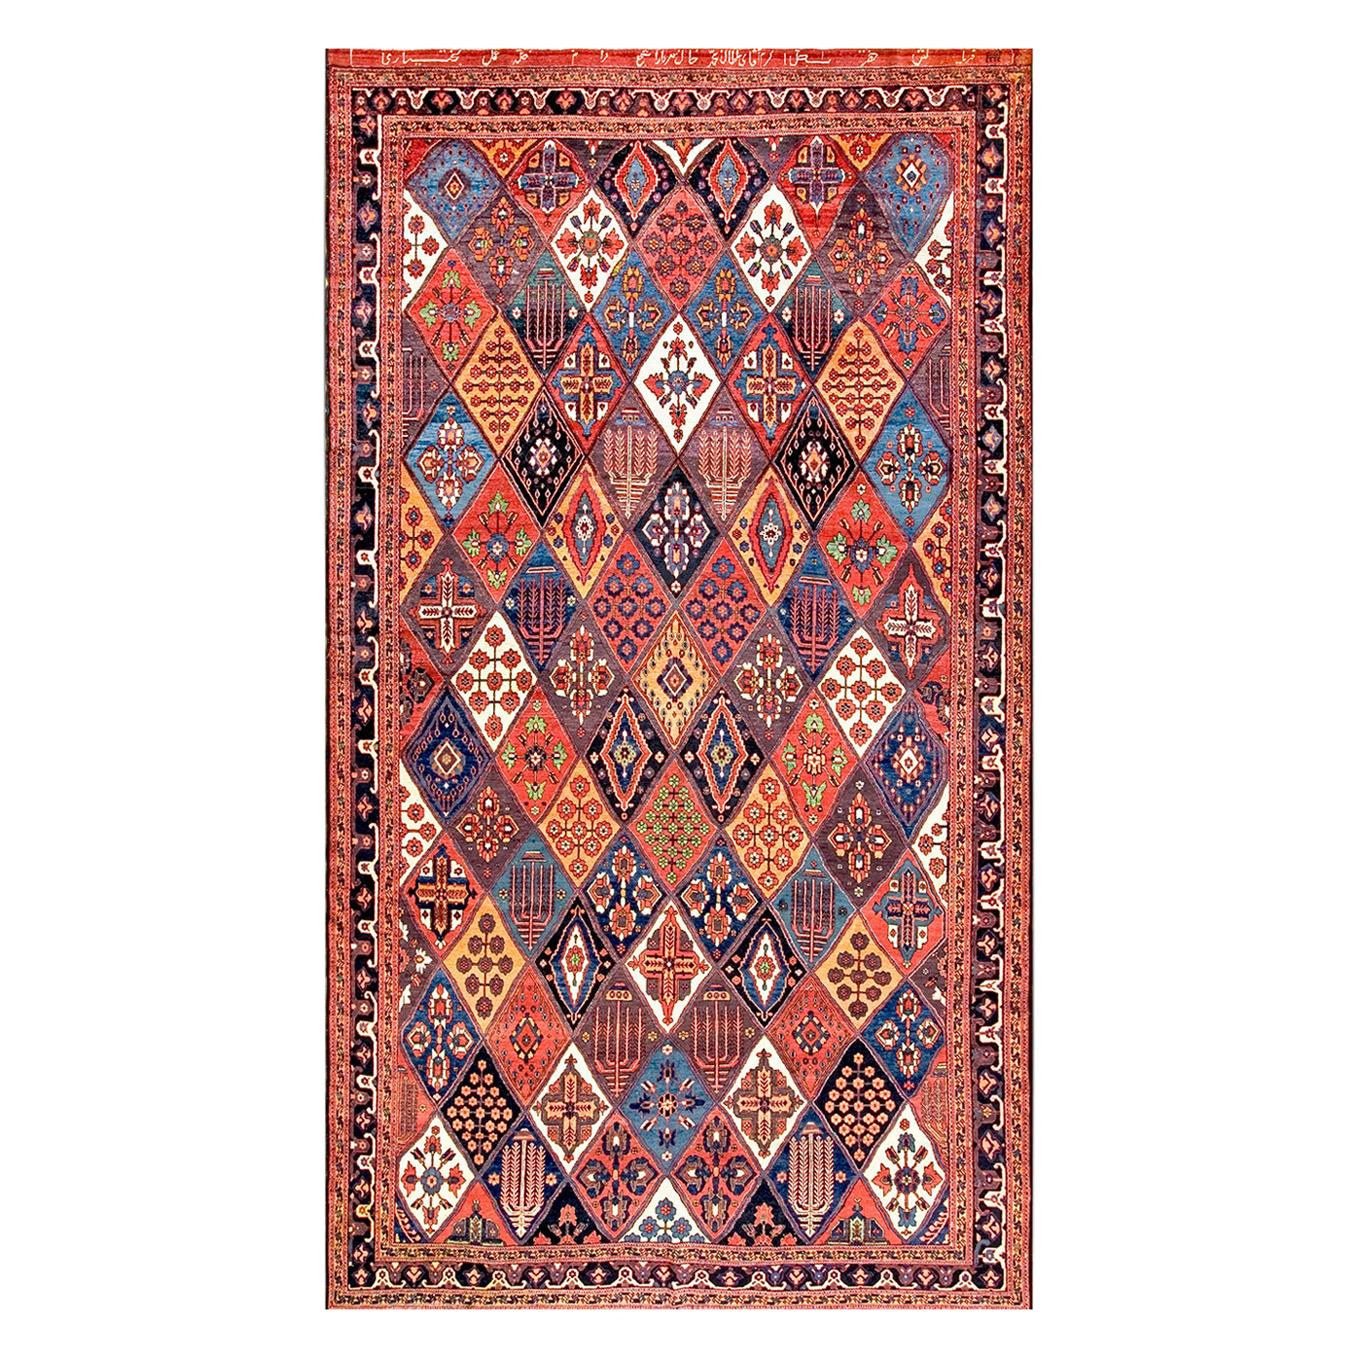 Late 19th Century Inscribed Persian Bakhtiari Carpet (7'4" x 13'3" - 224 x 404) For Sale